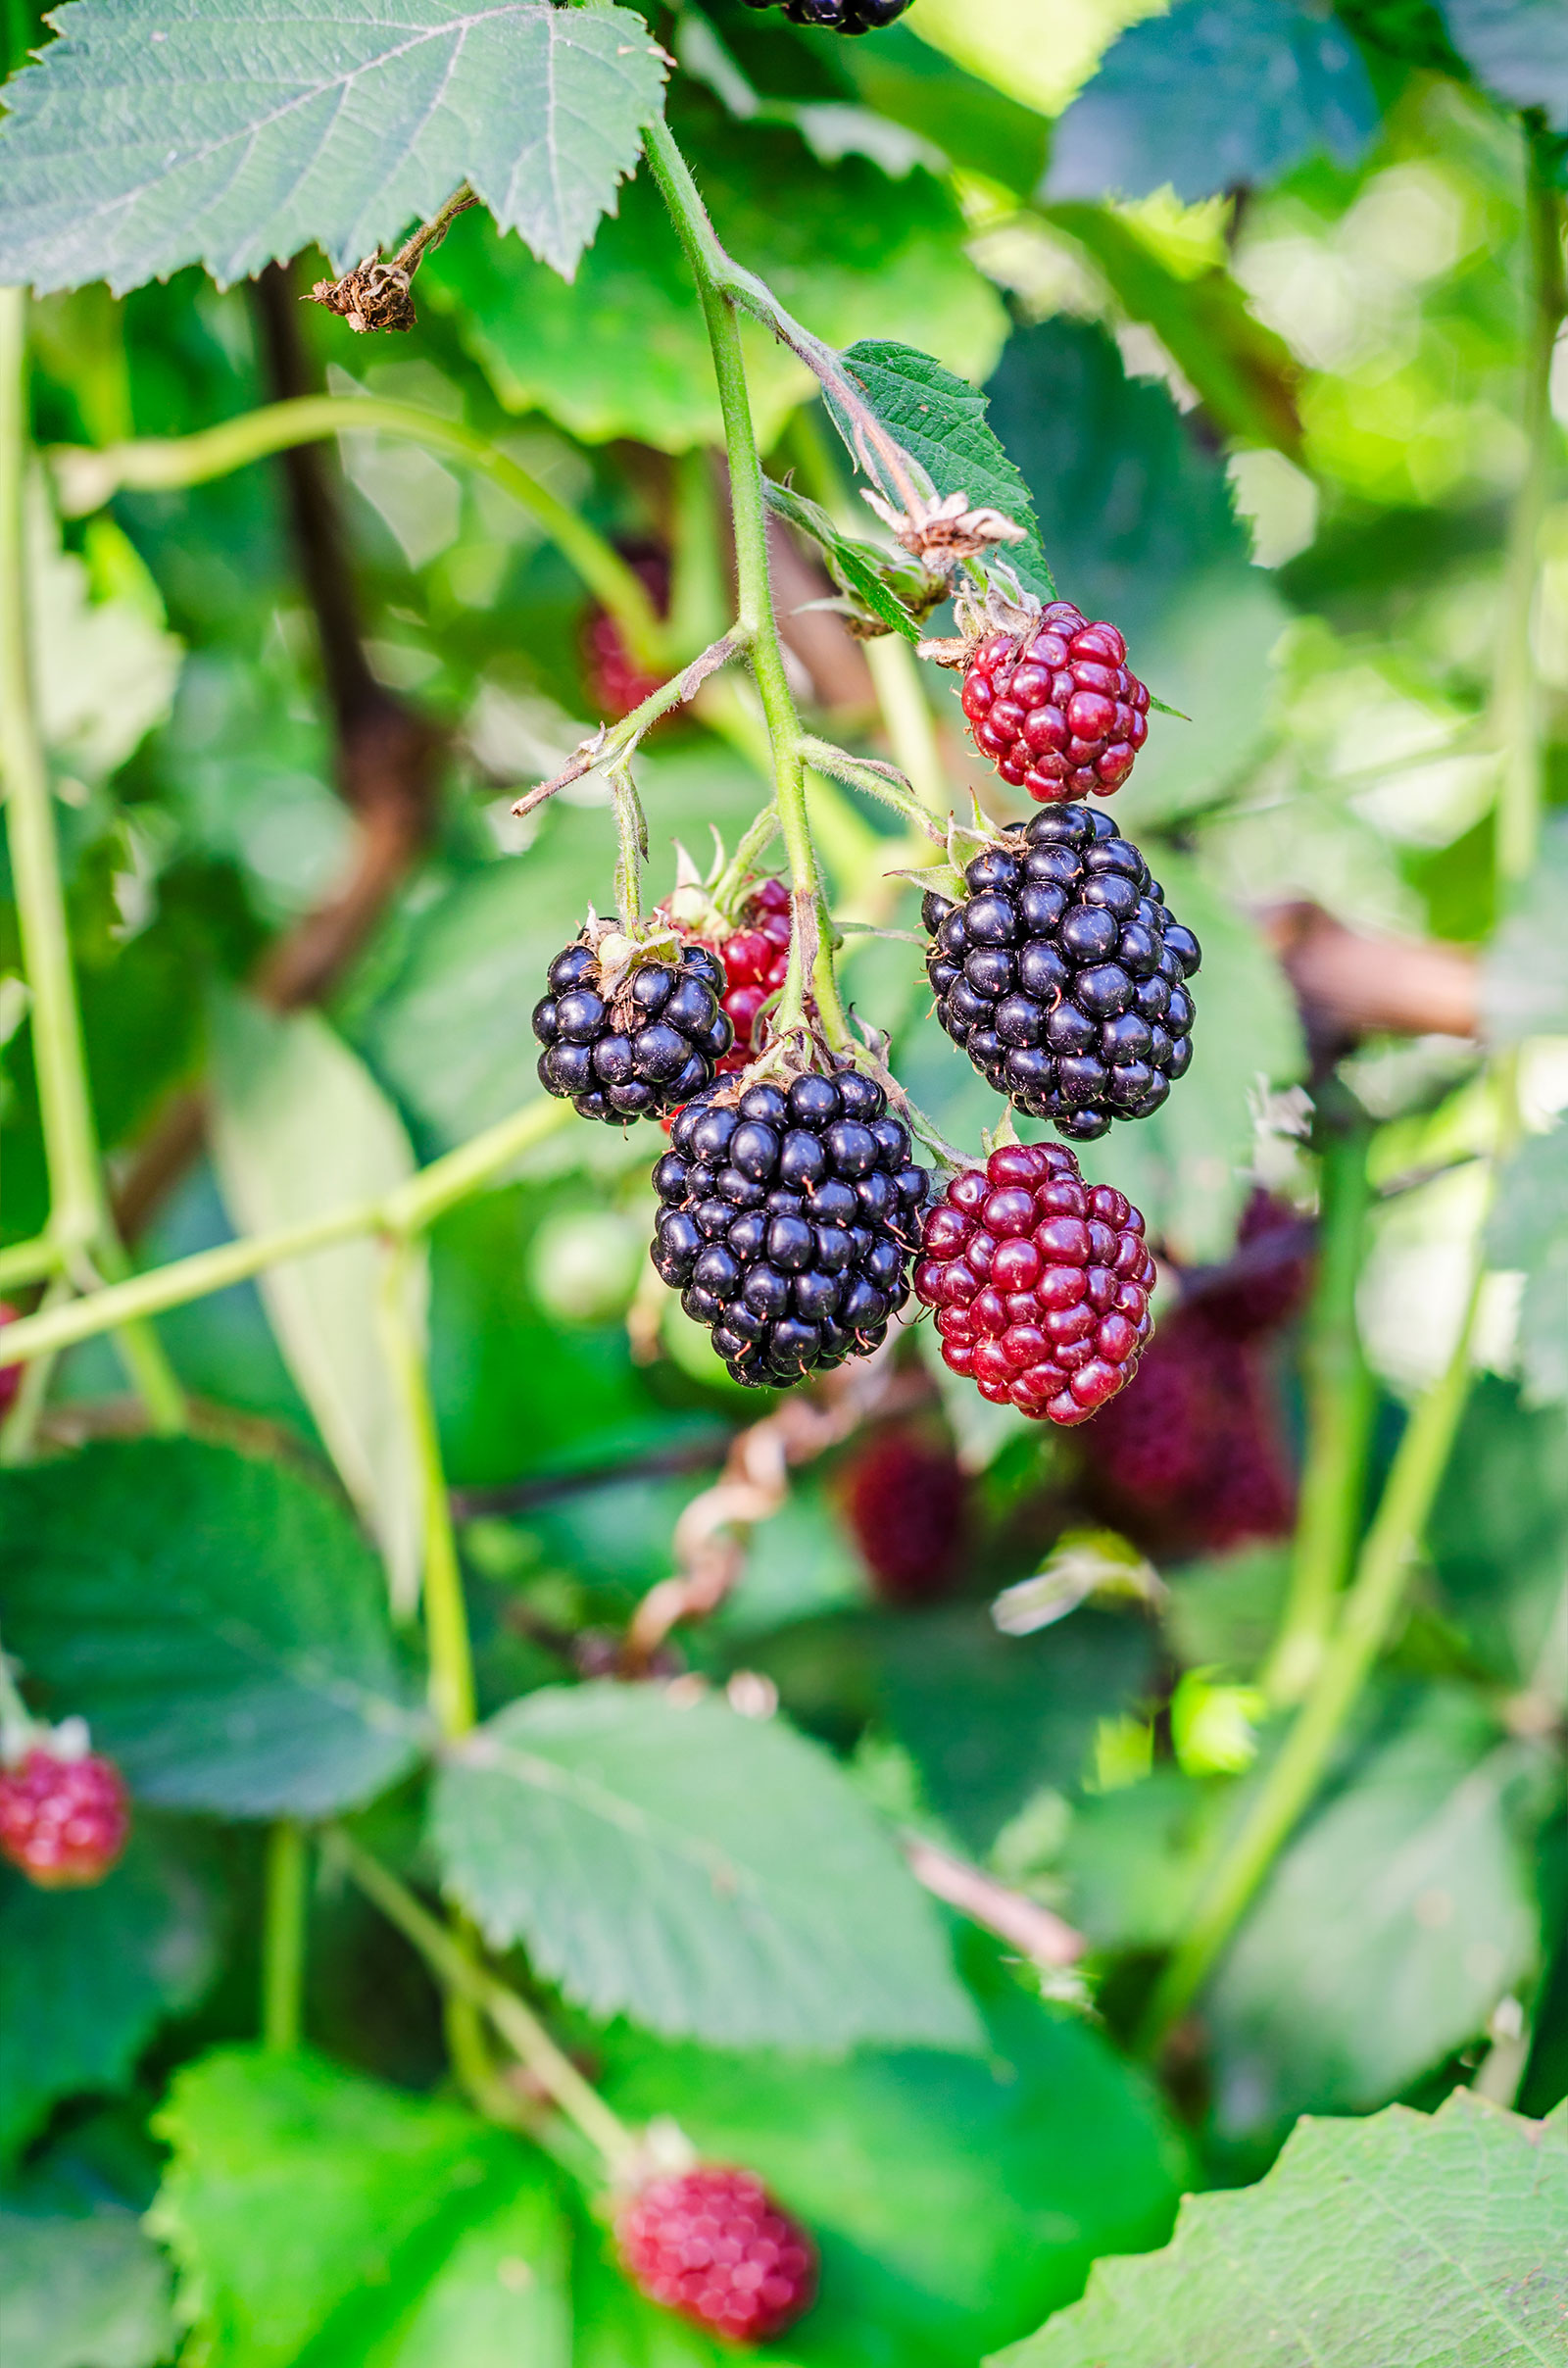 Wild Fruit: Finding Free Food in Your Neighborhood - NaturalCave